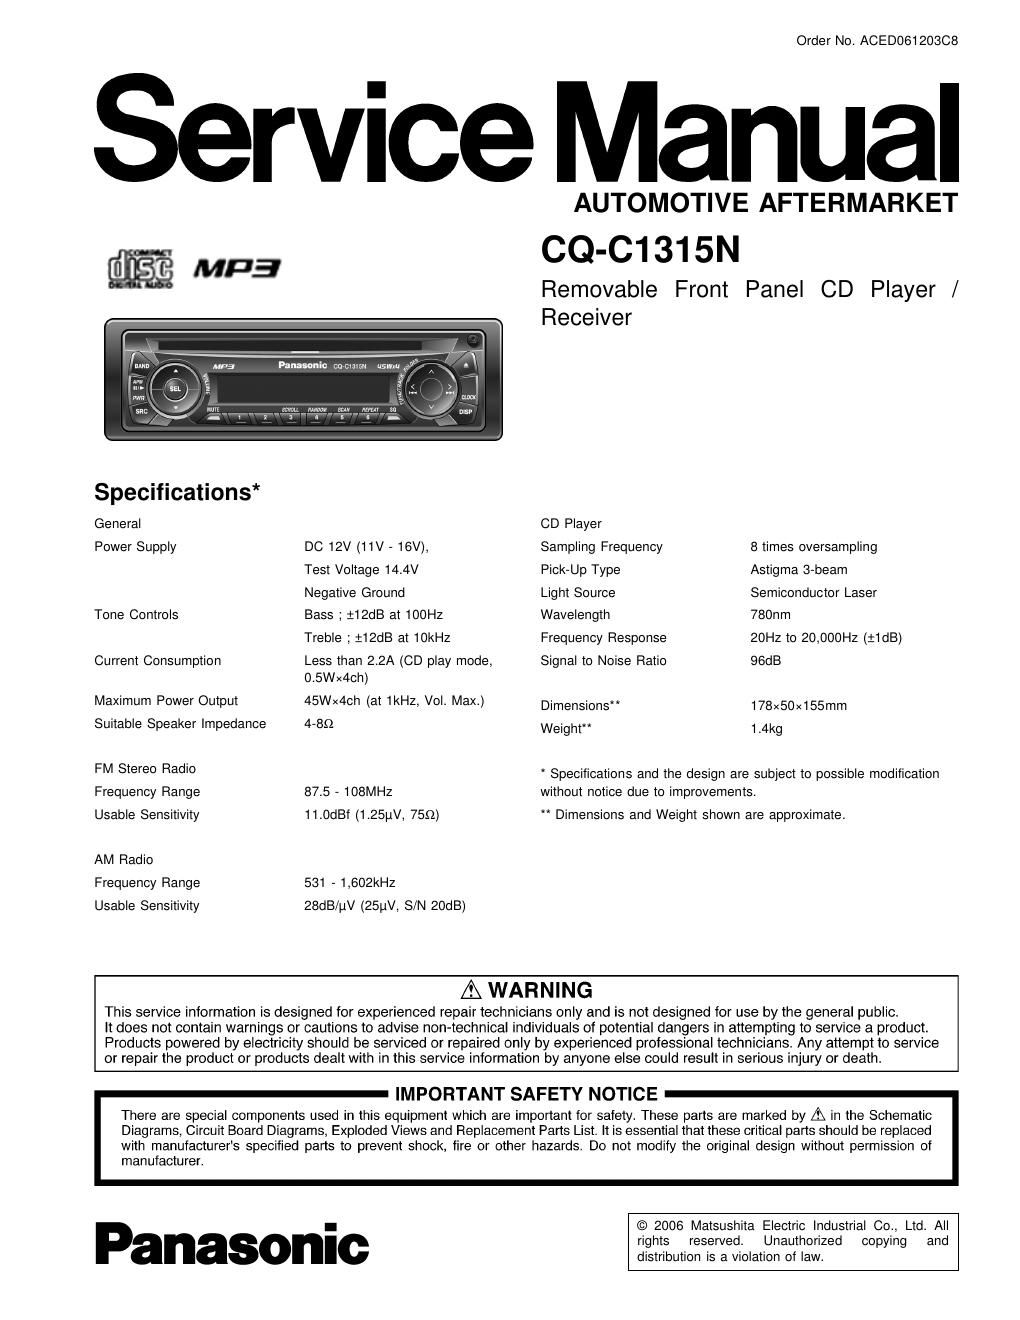 panasonic cq c 1315 n service manual